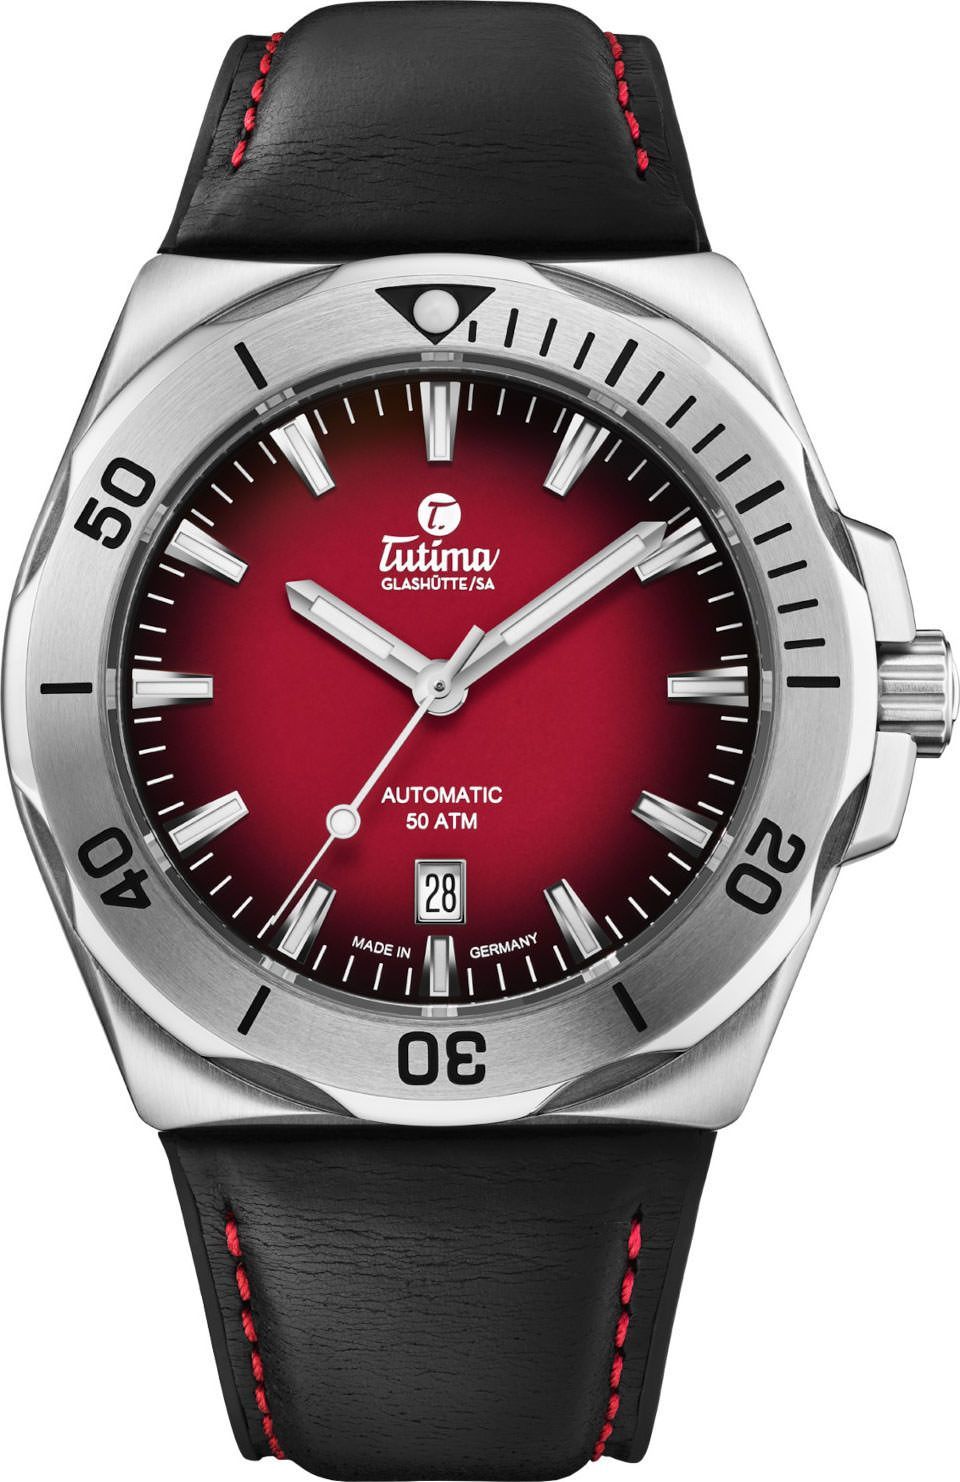 Tutima Glashütte M2 Seven Seas S Red Dial 44 mm Automatic Watch For Men - 1